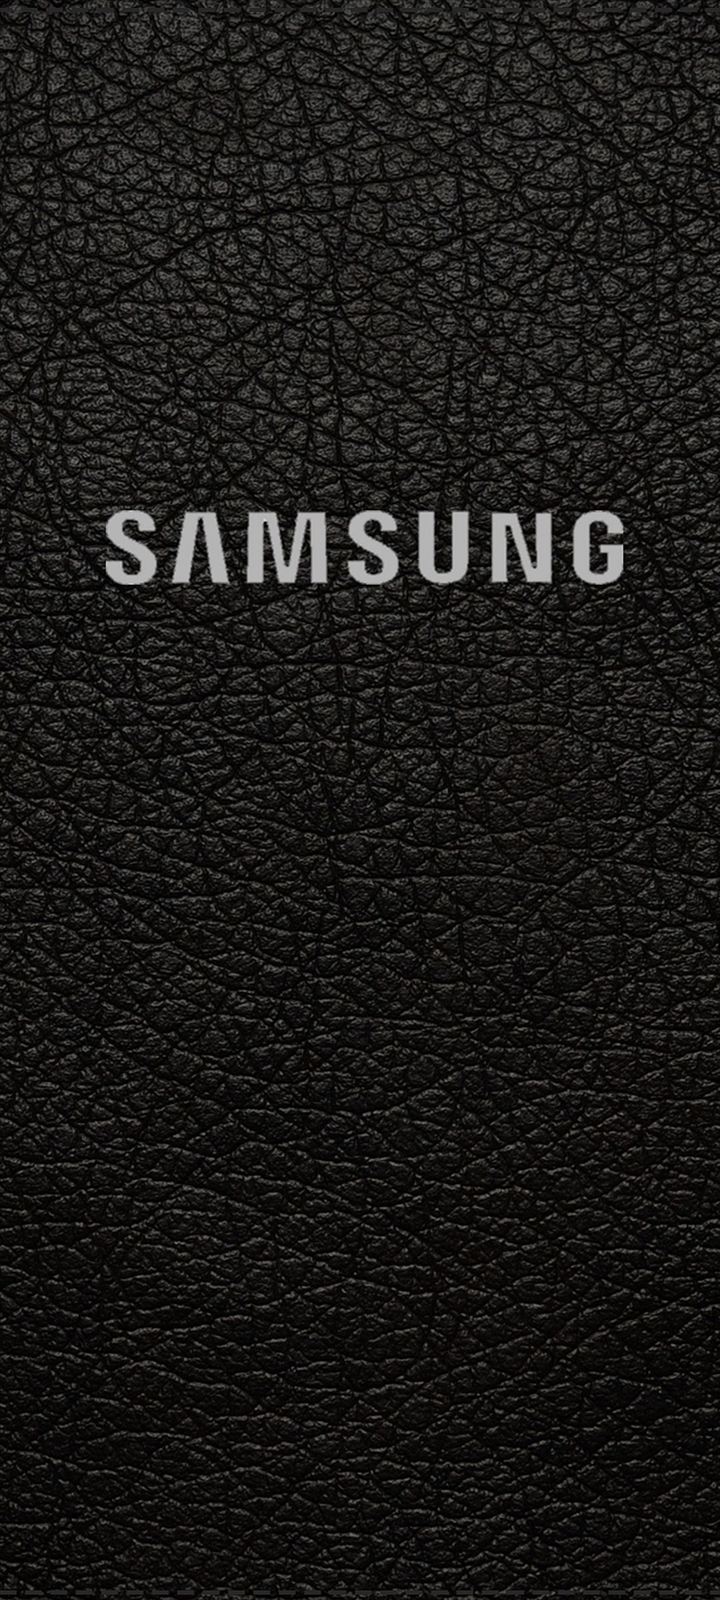 Samsung レザー 黒 革 Oppo A5 Androidスマホ壁紙 待ち受け スマラン